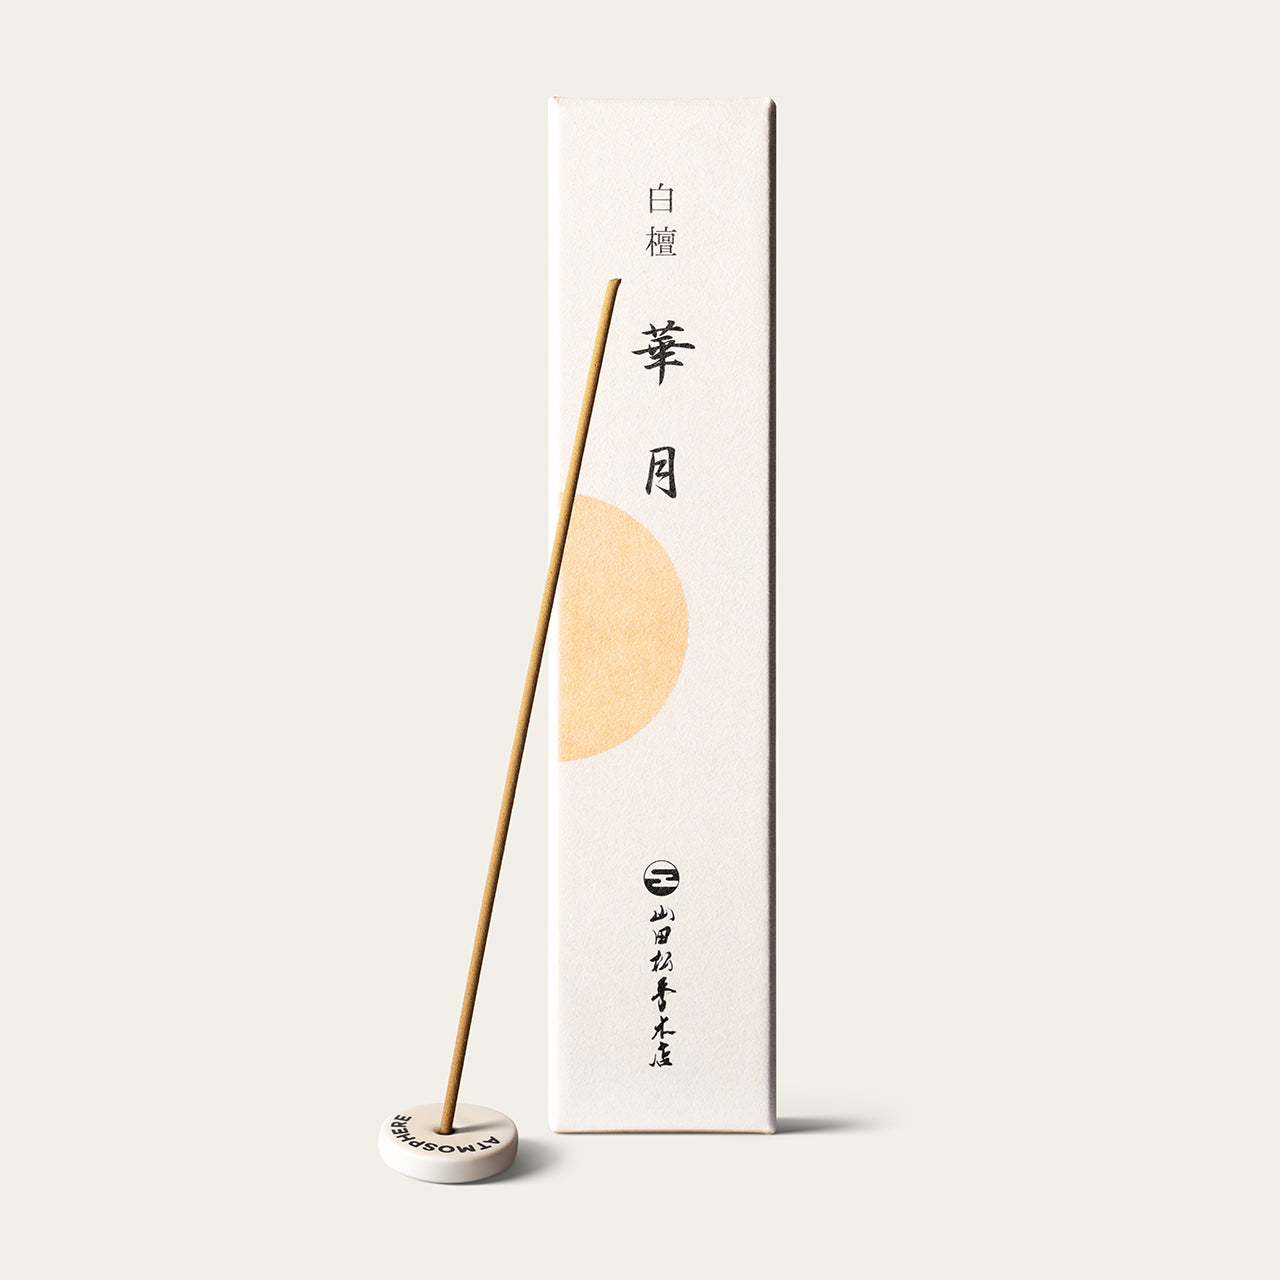 Yamadamatsu Premium Lunar Blossom Kagetsu Japanese incense sticks (75 sticks) with Atmosphere ceramic incense holder